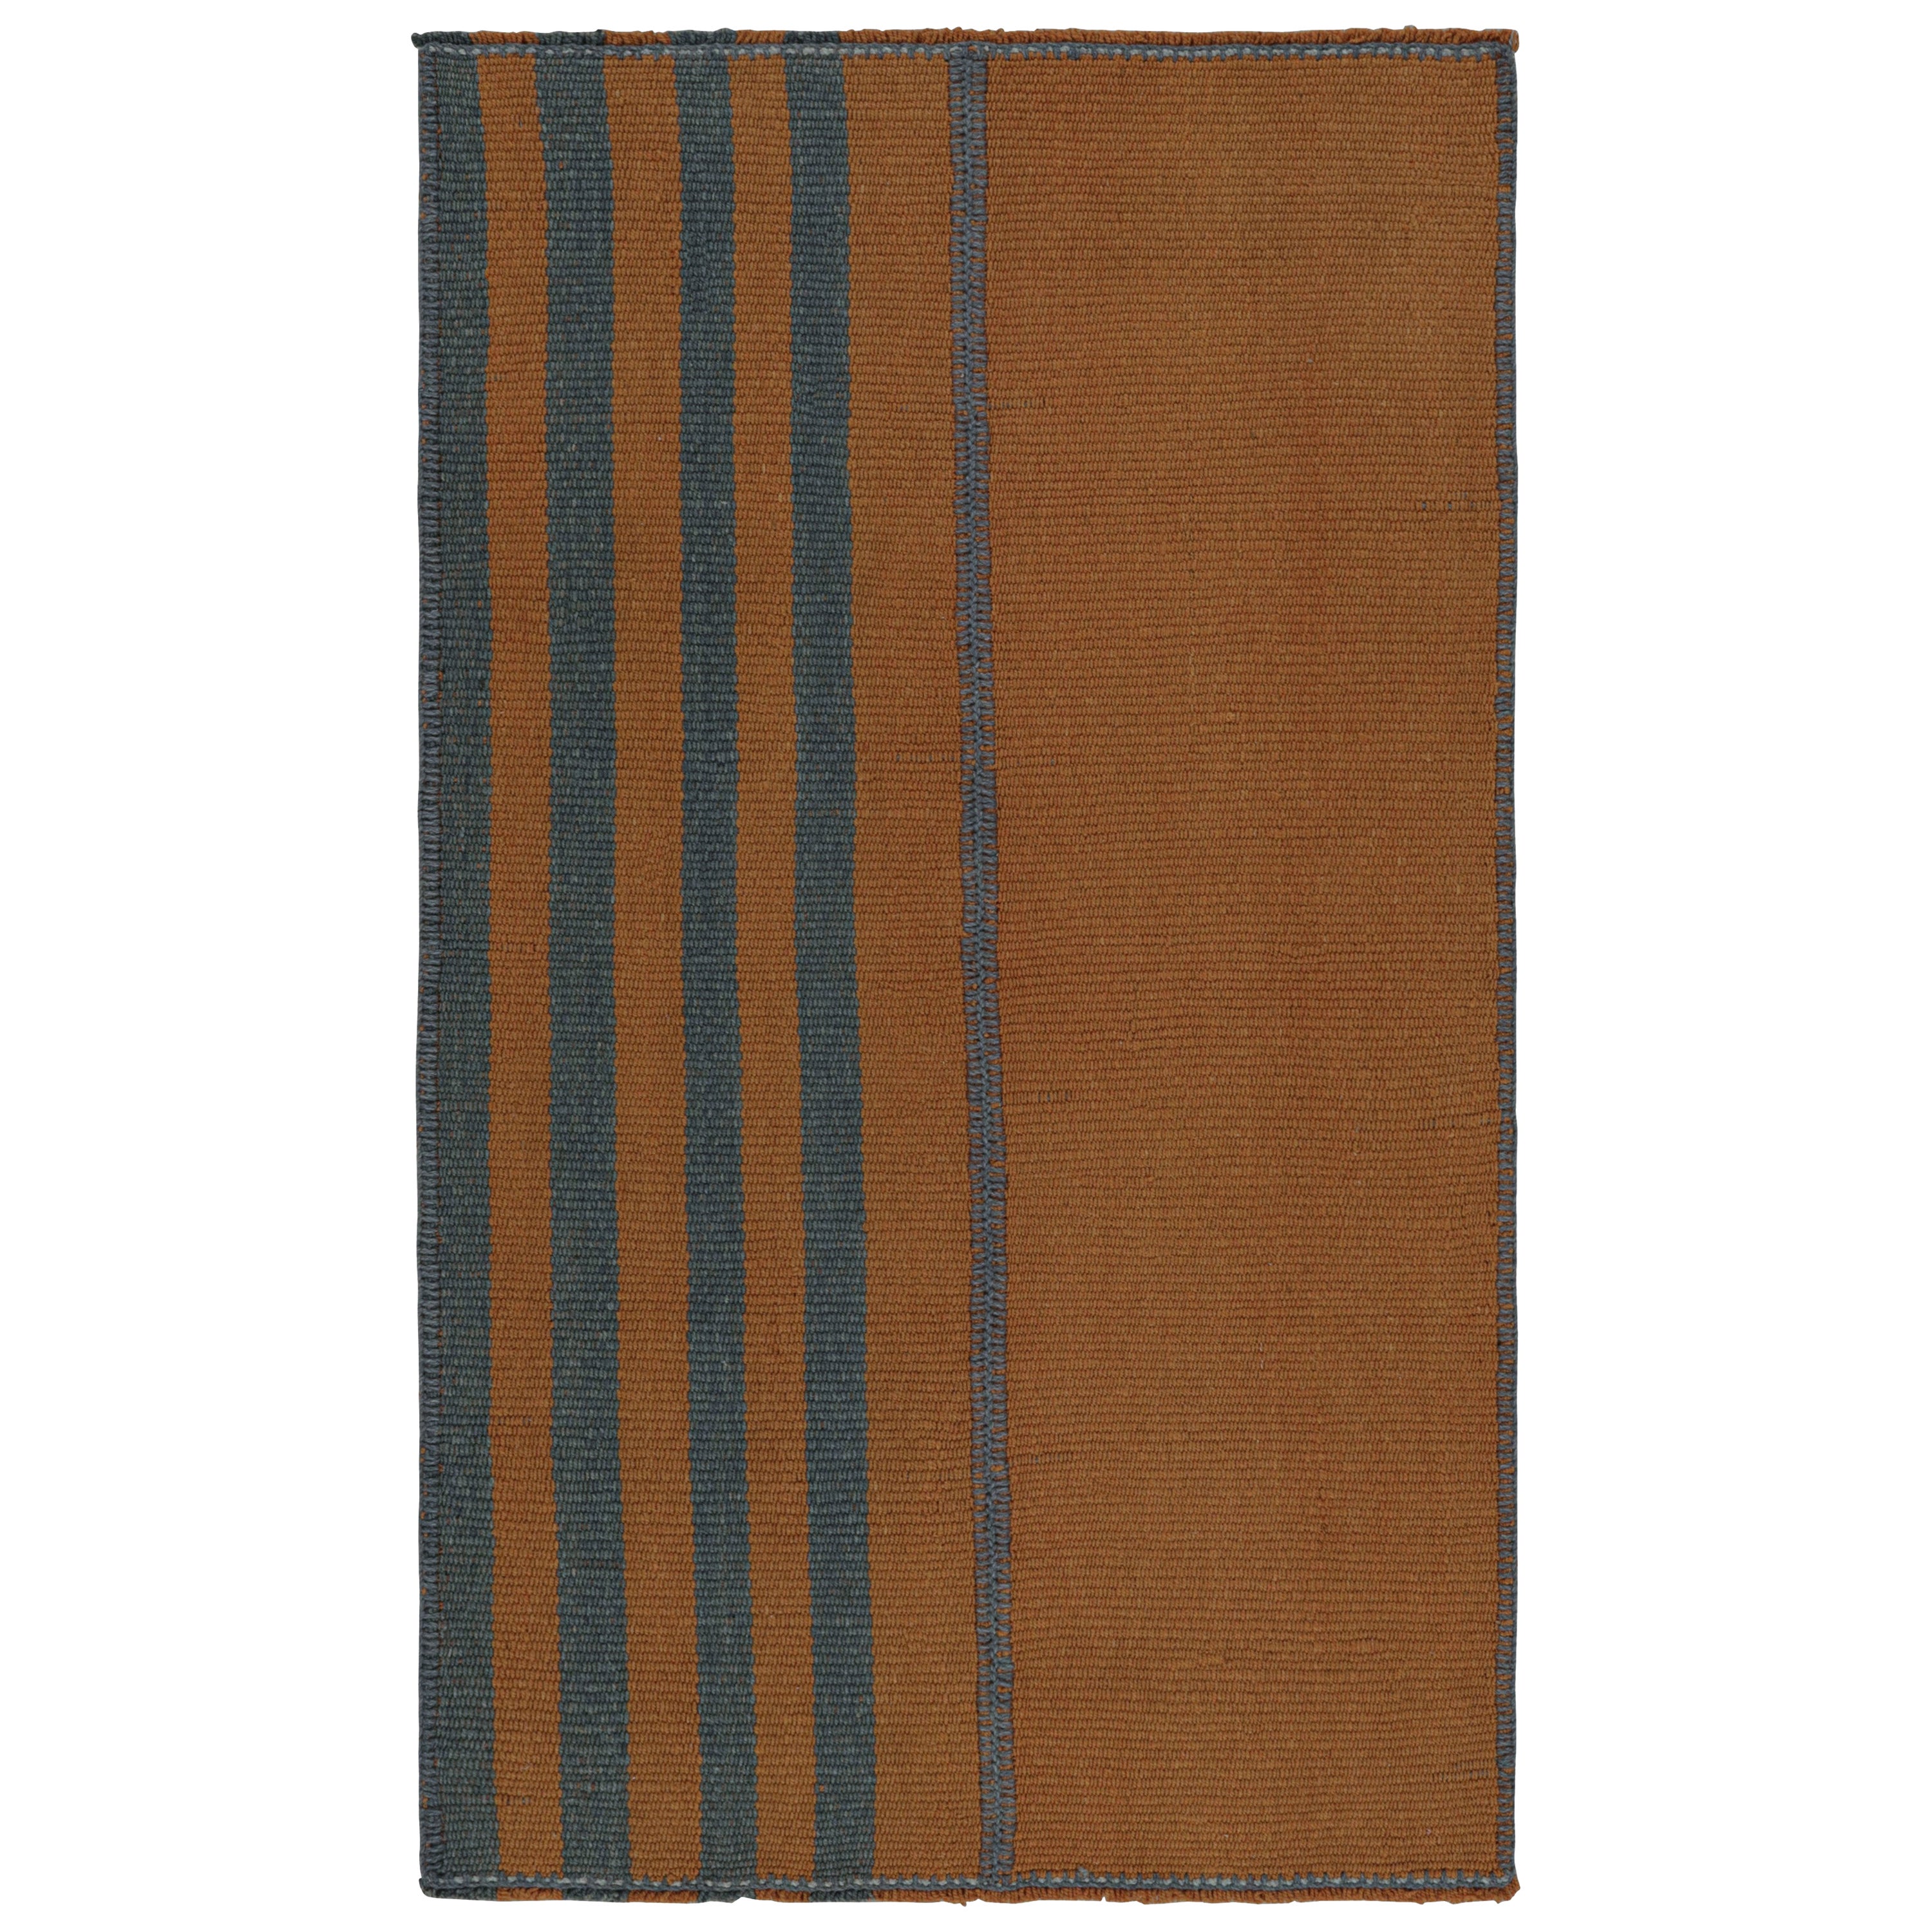 Rug & Kilim’s Contemporary Kilim Scatter Rug, In Orange And Blue Stripes